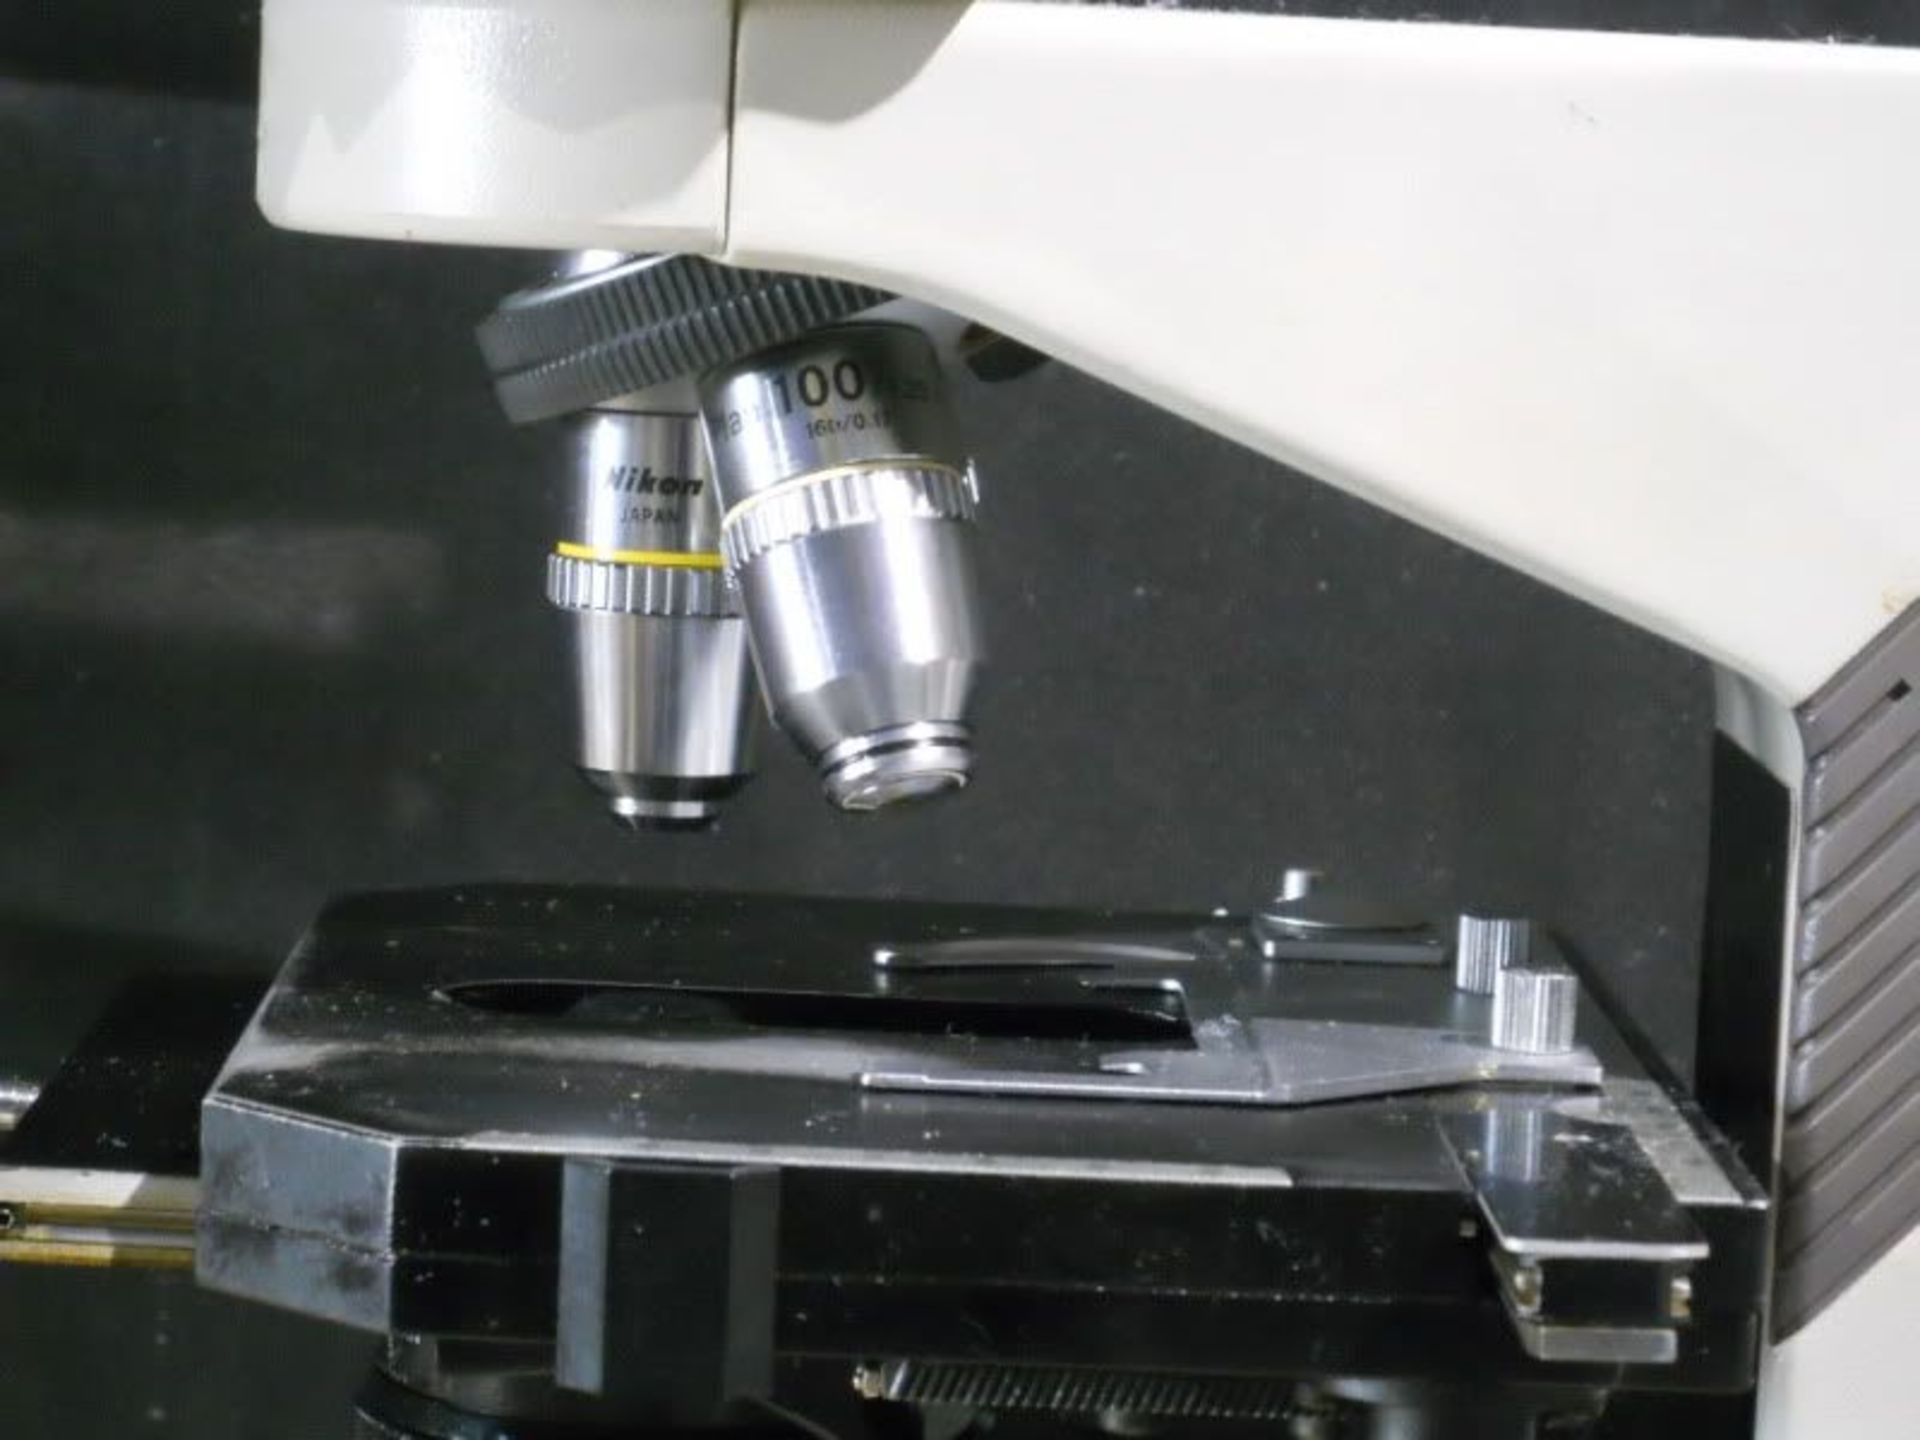 Nikon Labophot 2 Dual Viewing Teaching Microscope, Qty 1, 220748473340 - Image 9 of 10